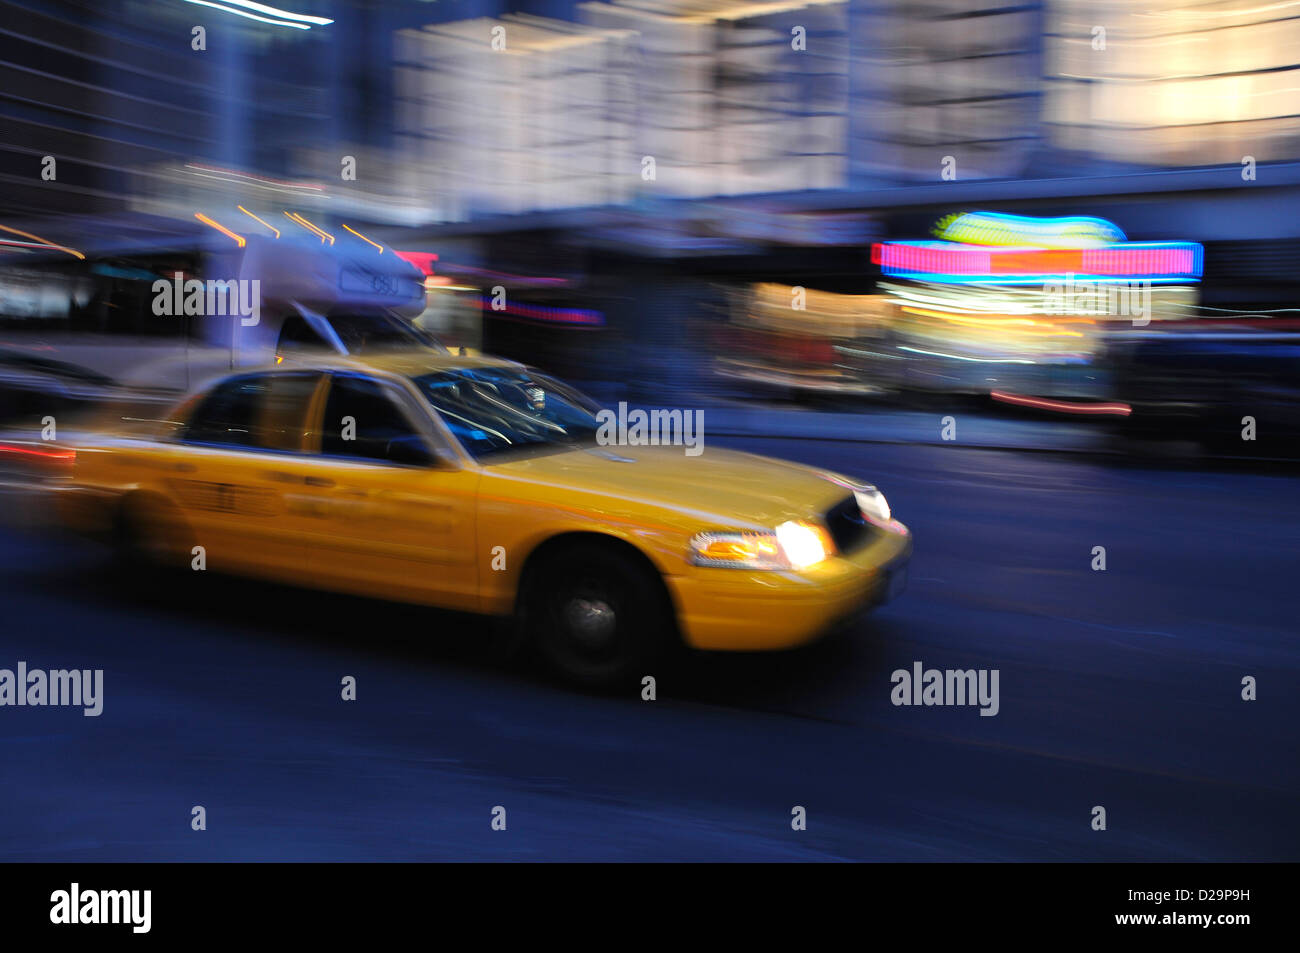 Taxi cab speeding down a city stree Stock Photo